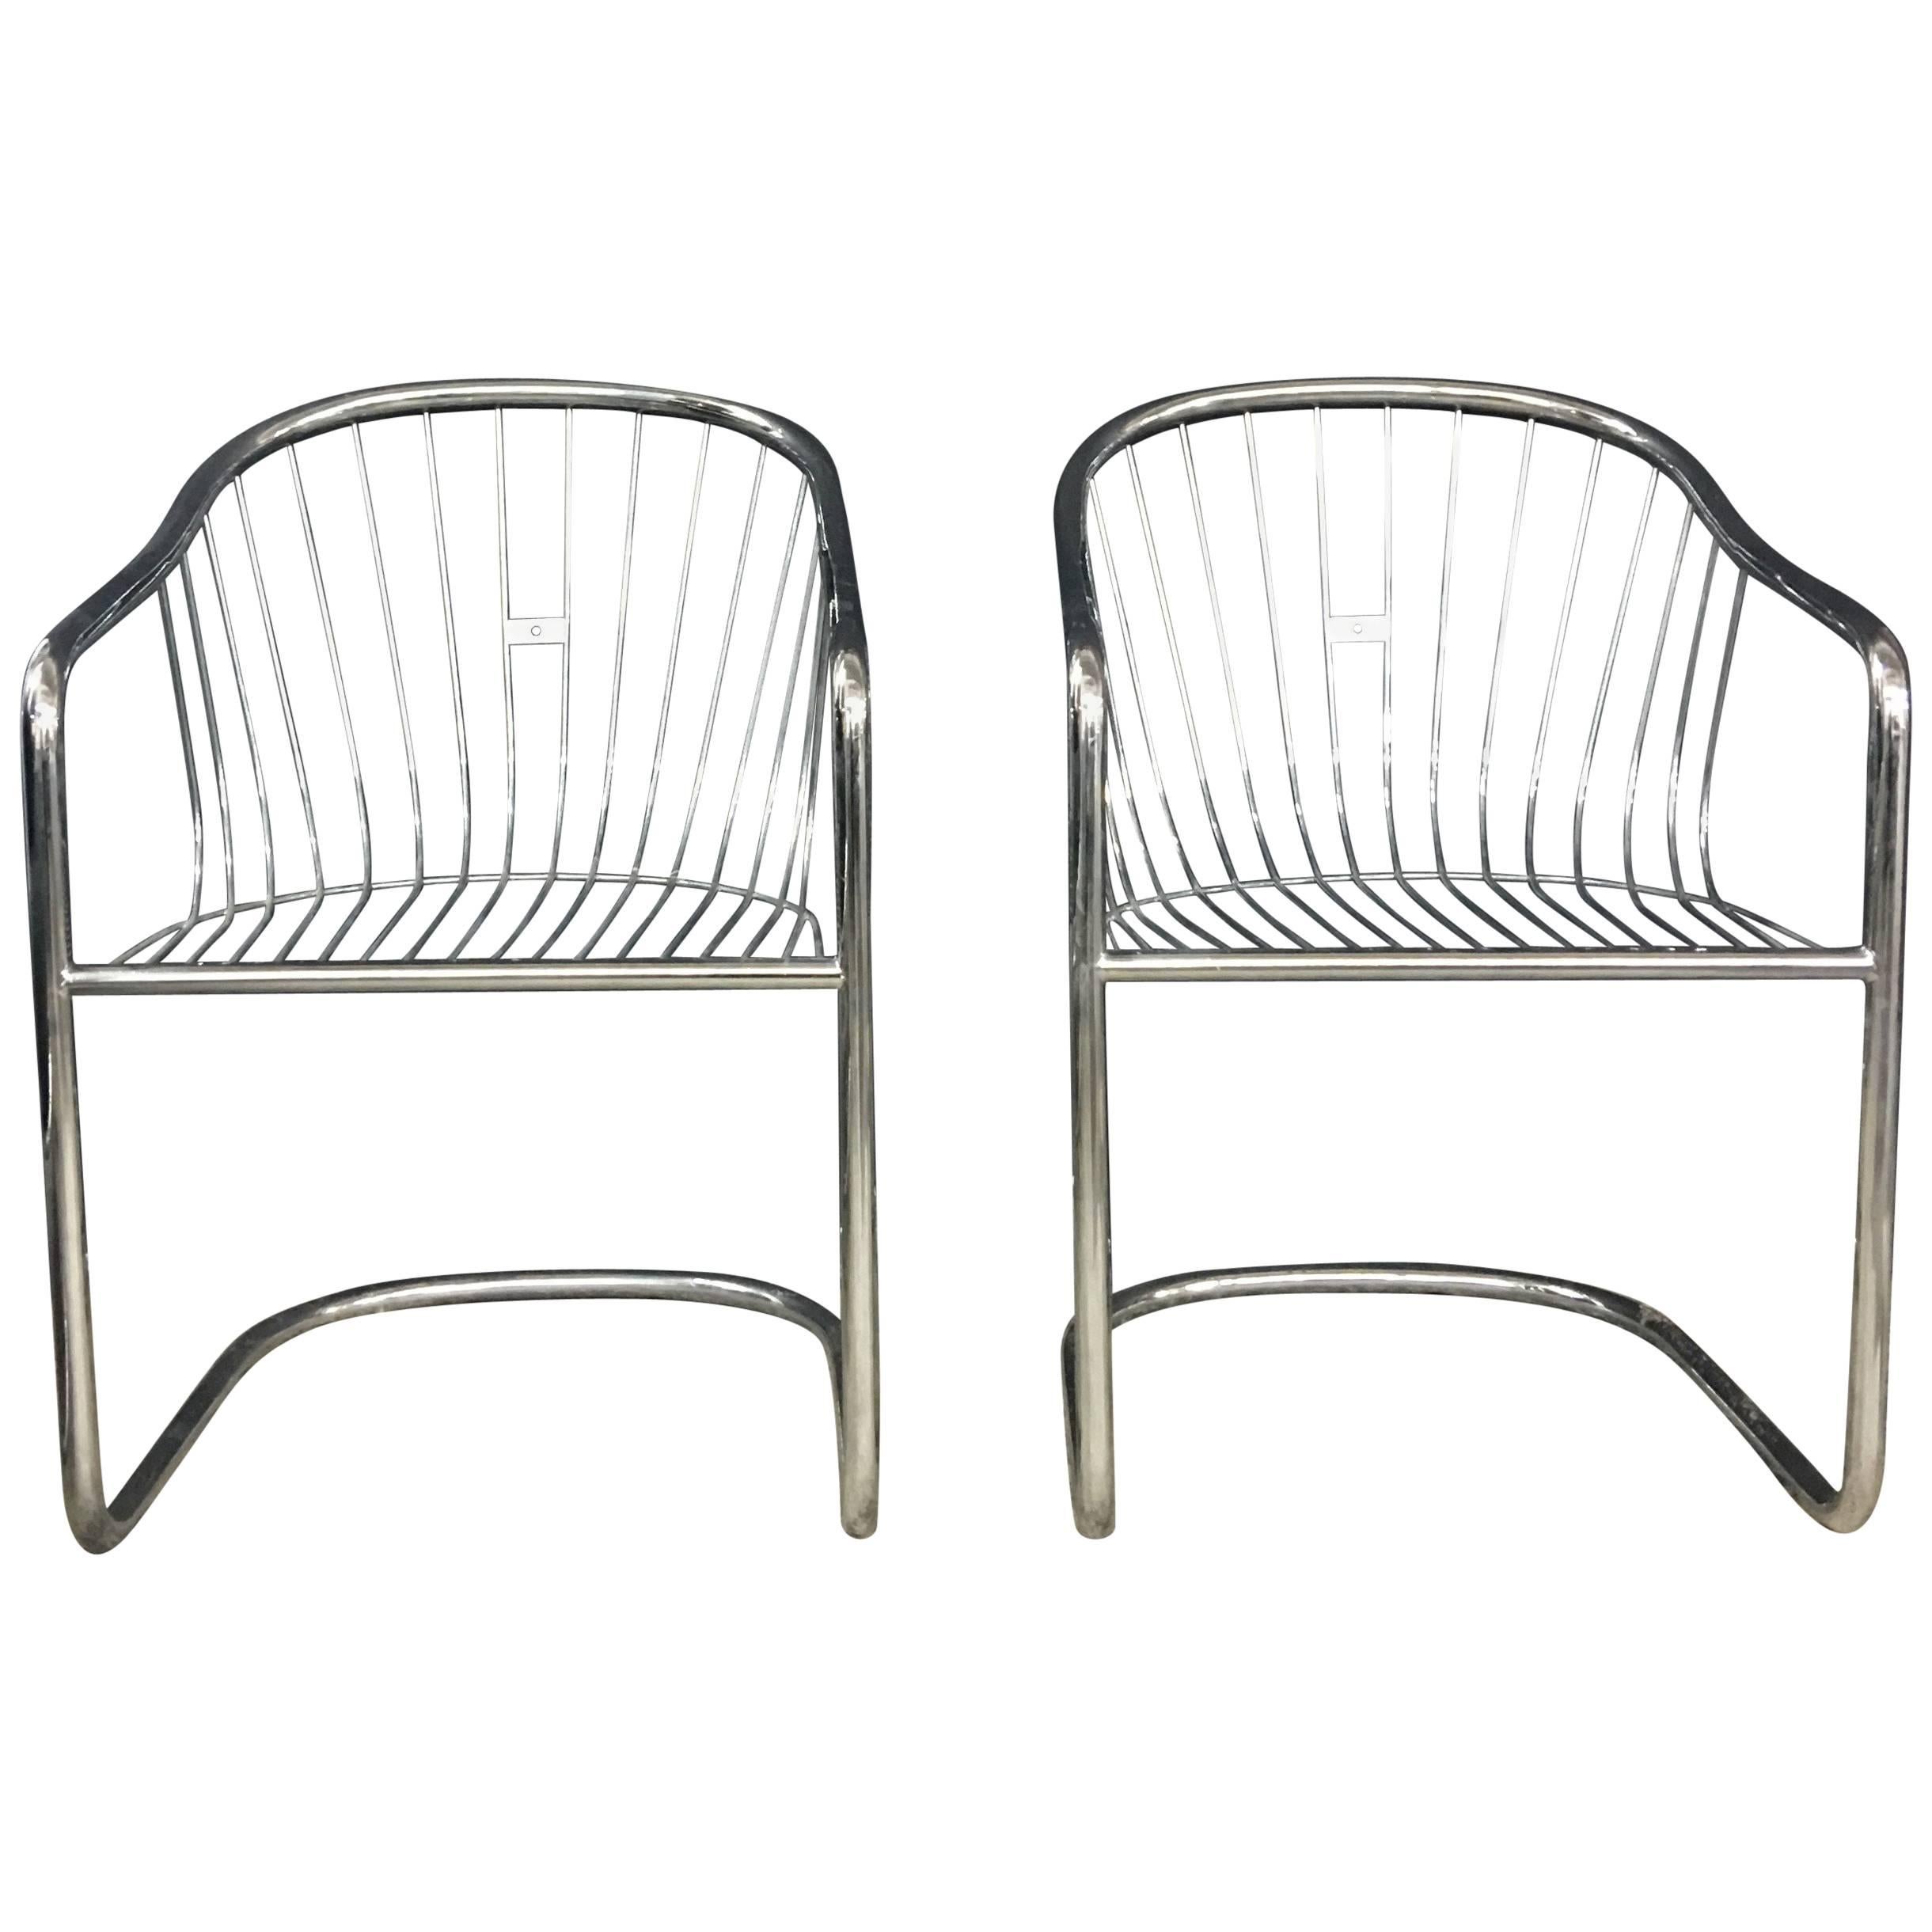 Pair of Gastone Rinaldi Vintage Chrome Cantilever Chairs